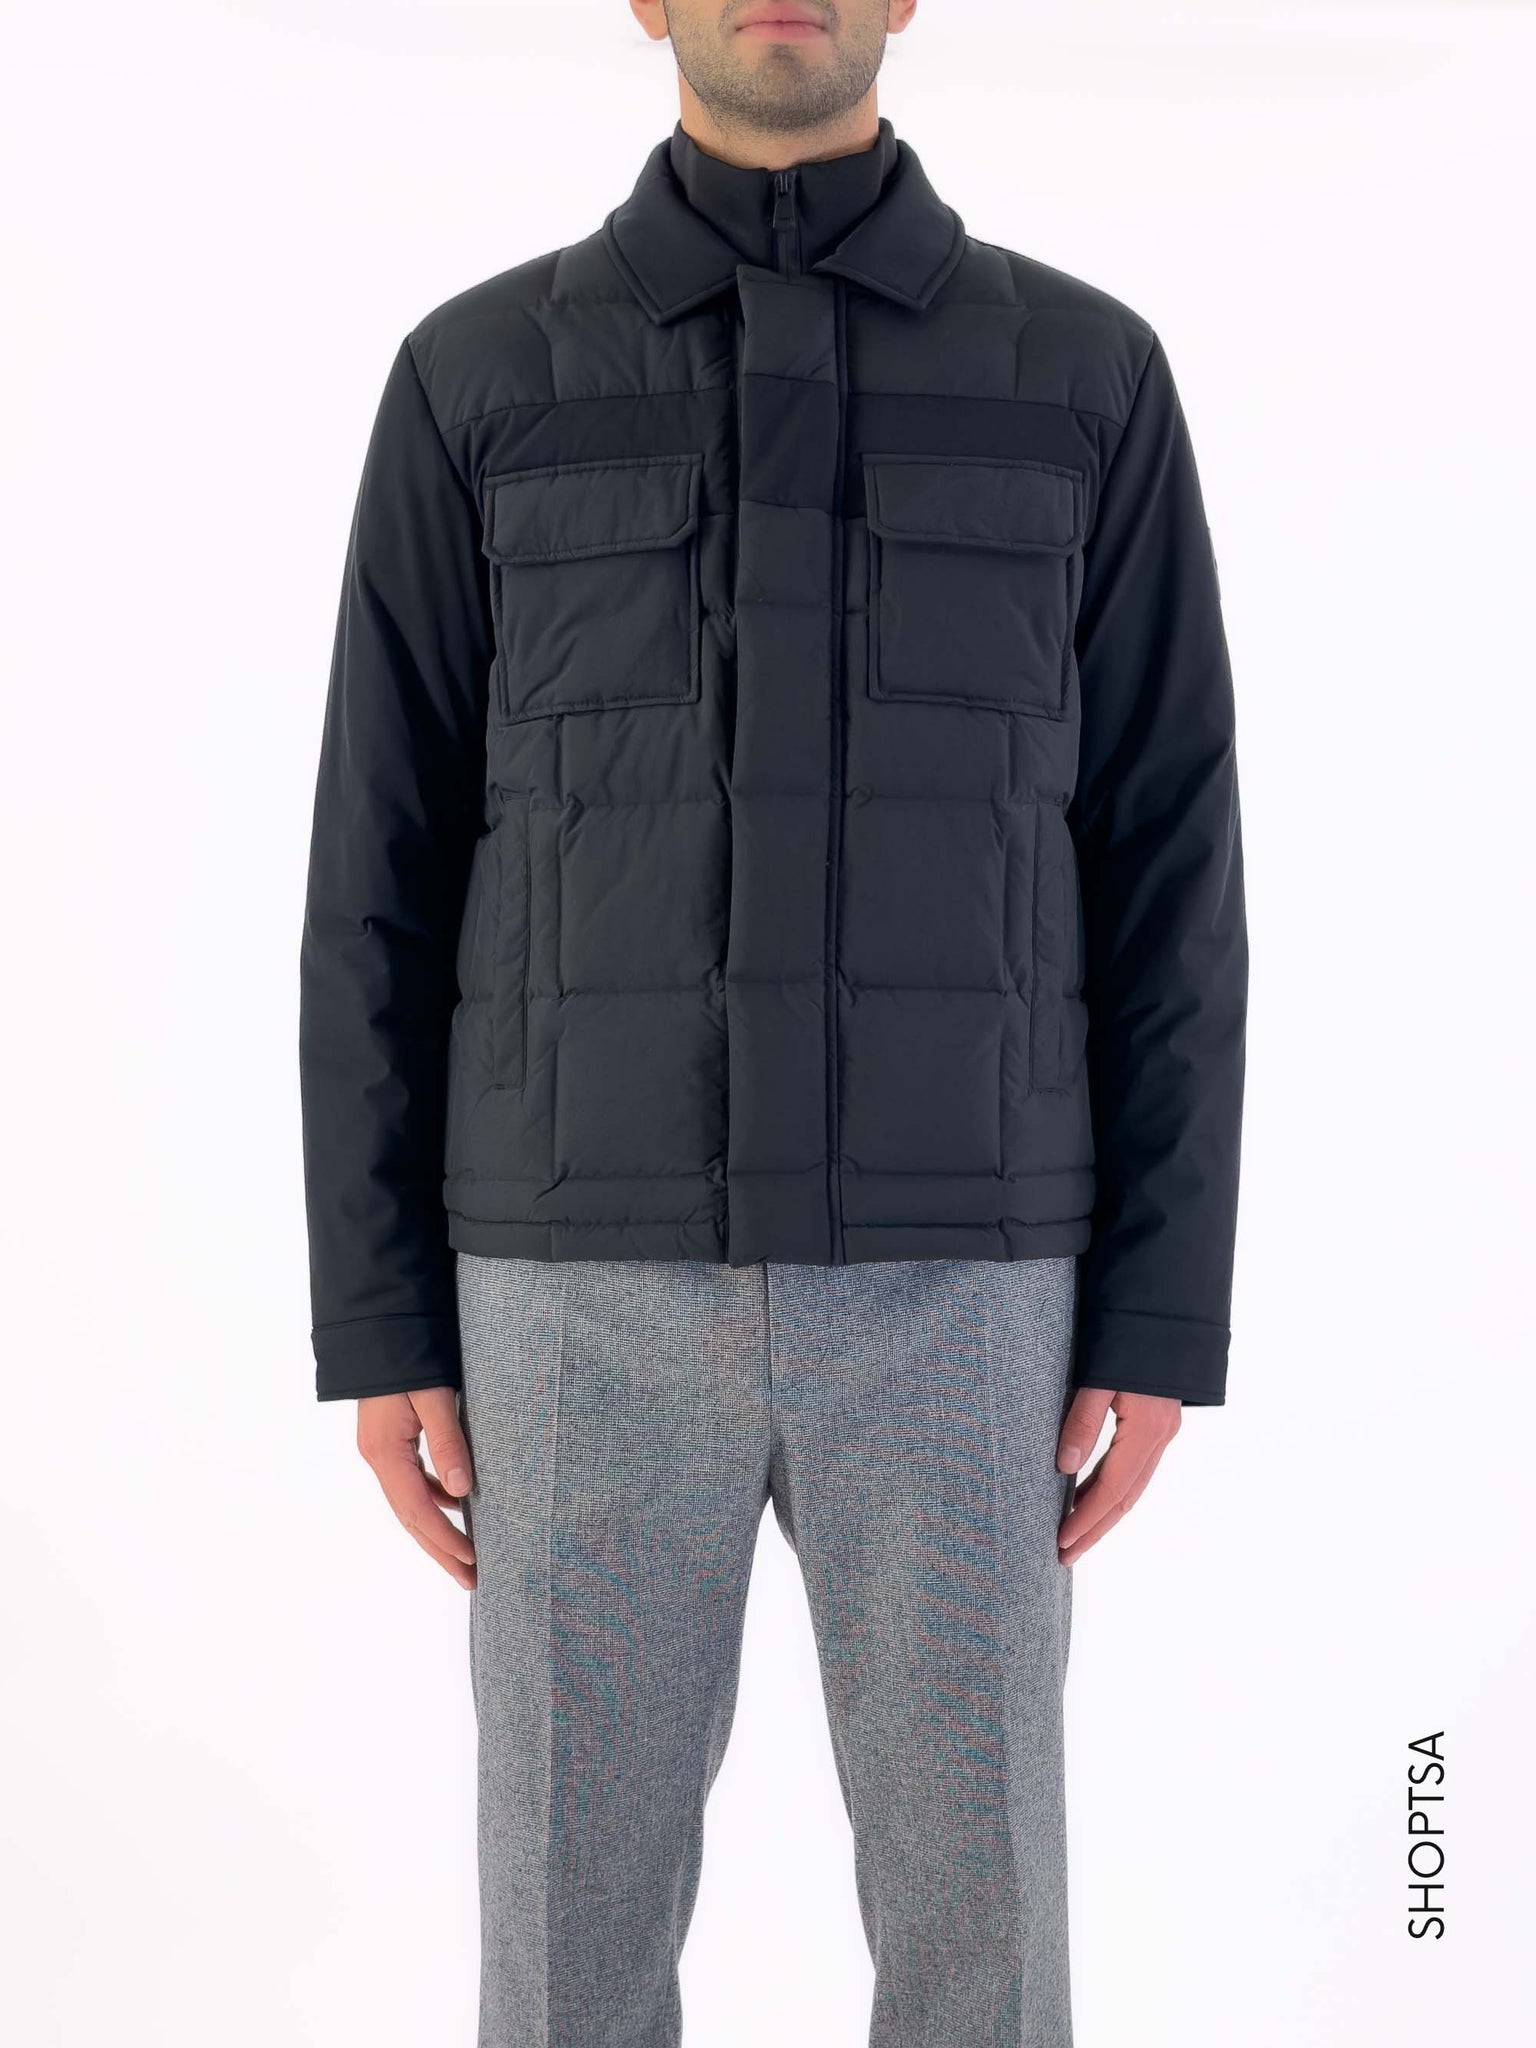 Calvin klein Menswear jacket - 110327